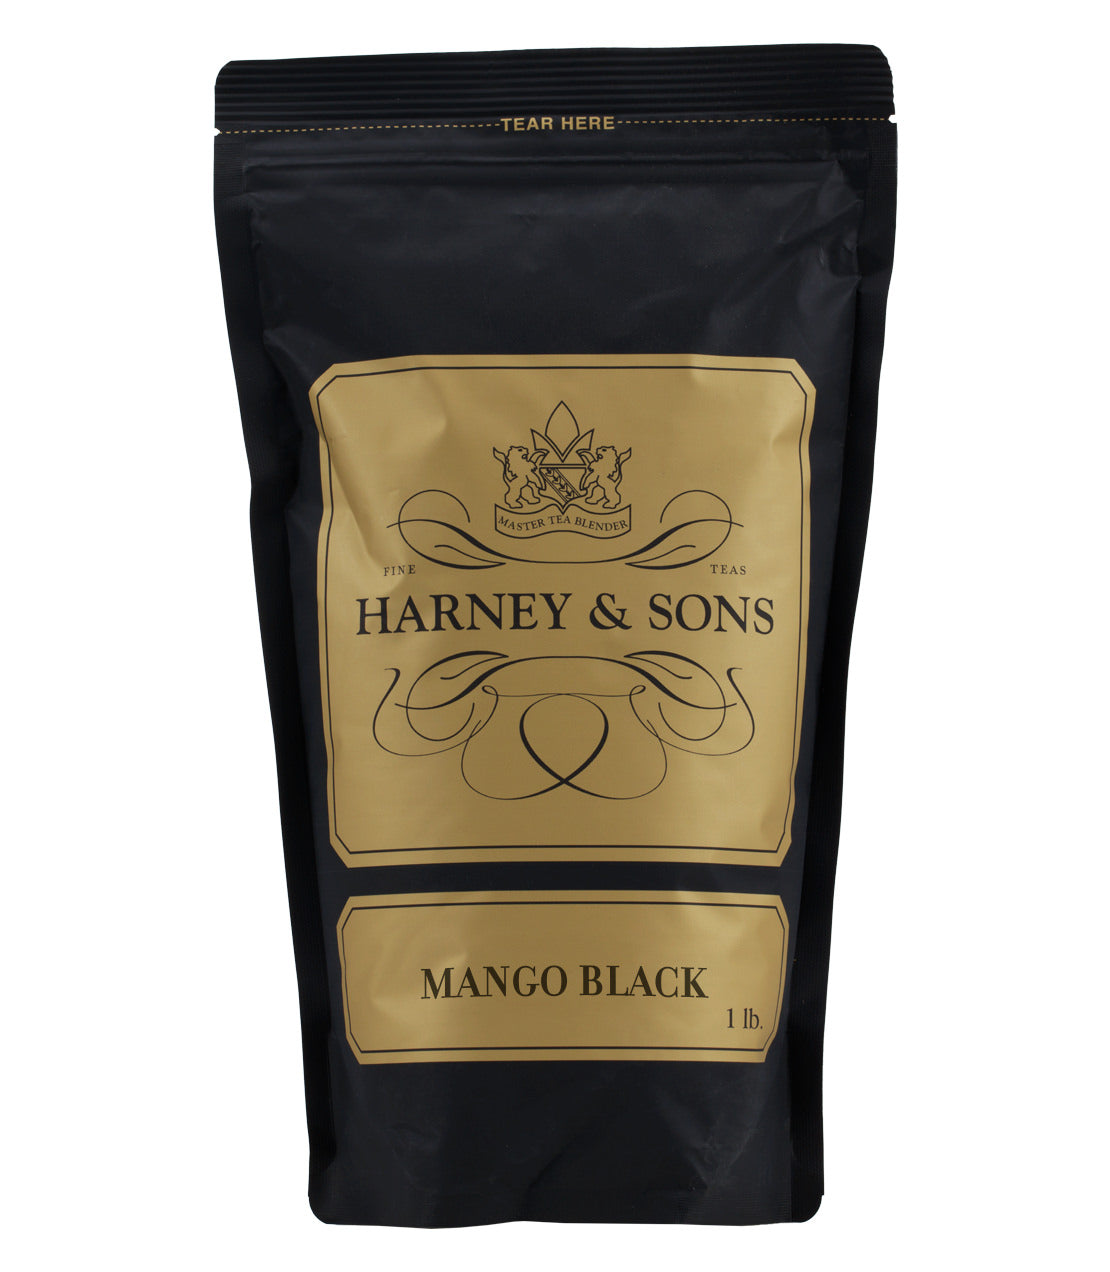 Mango Black - Loose 1 lb. Bag - Harney & Sons Fine Teas